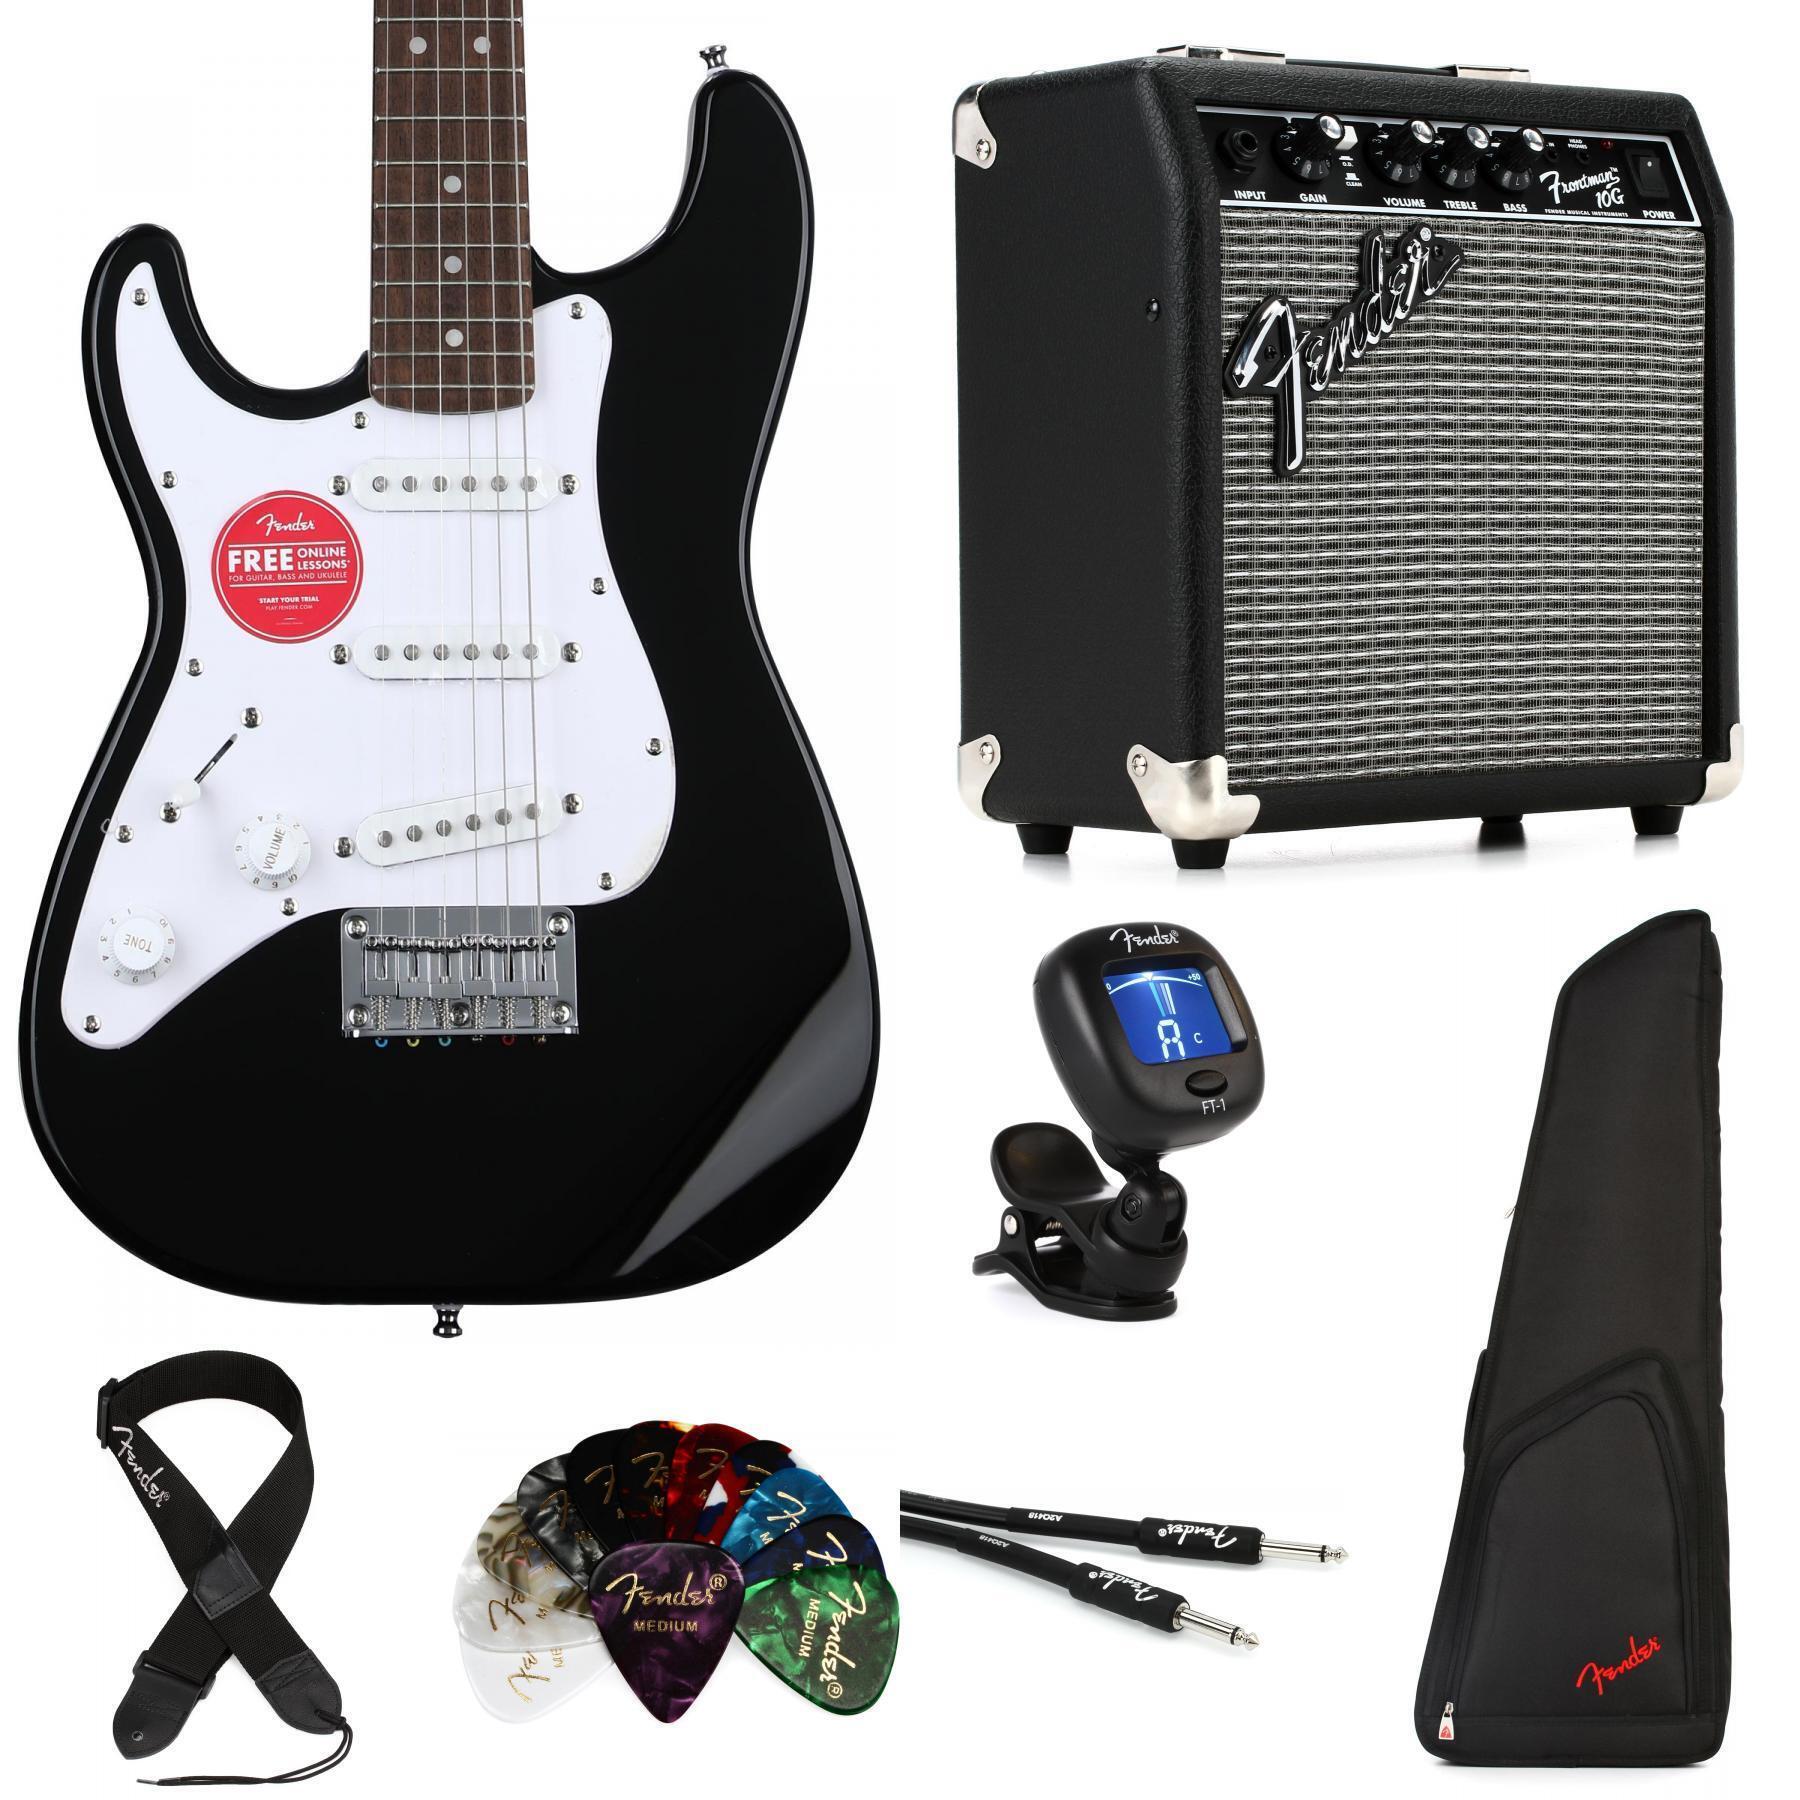 Squier Mini Stratocaster Left-handed Electric Guitar and Fender Frontman 10  Amp Essentials Bundle - Black